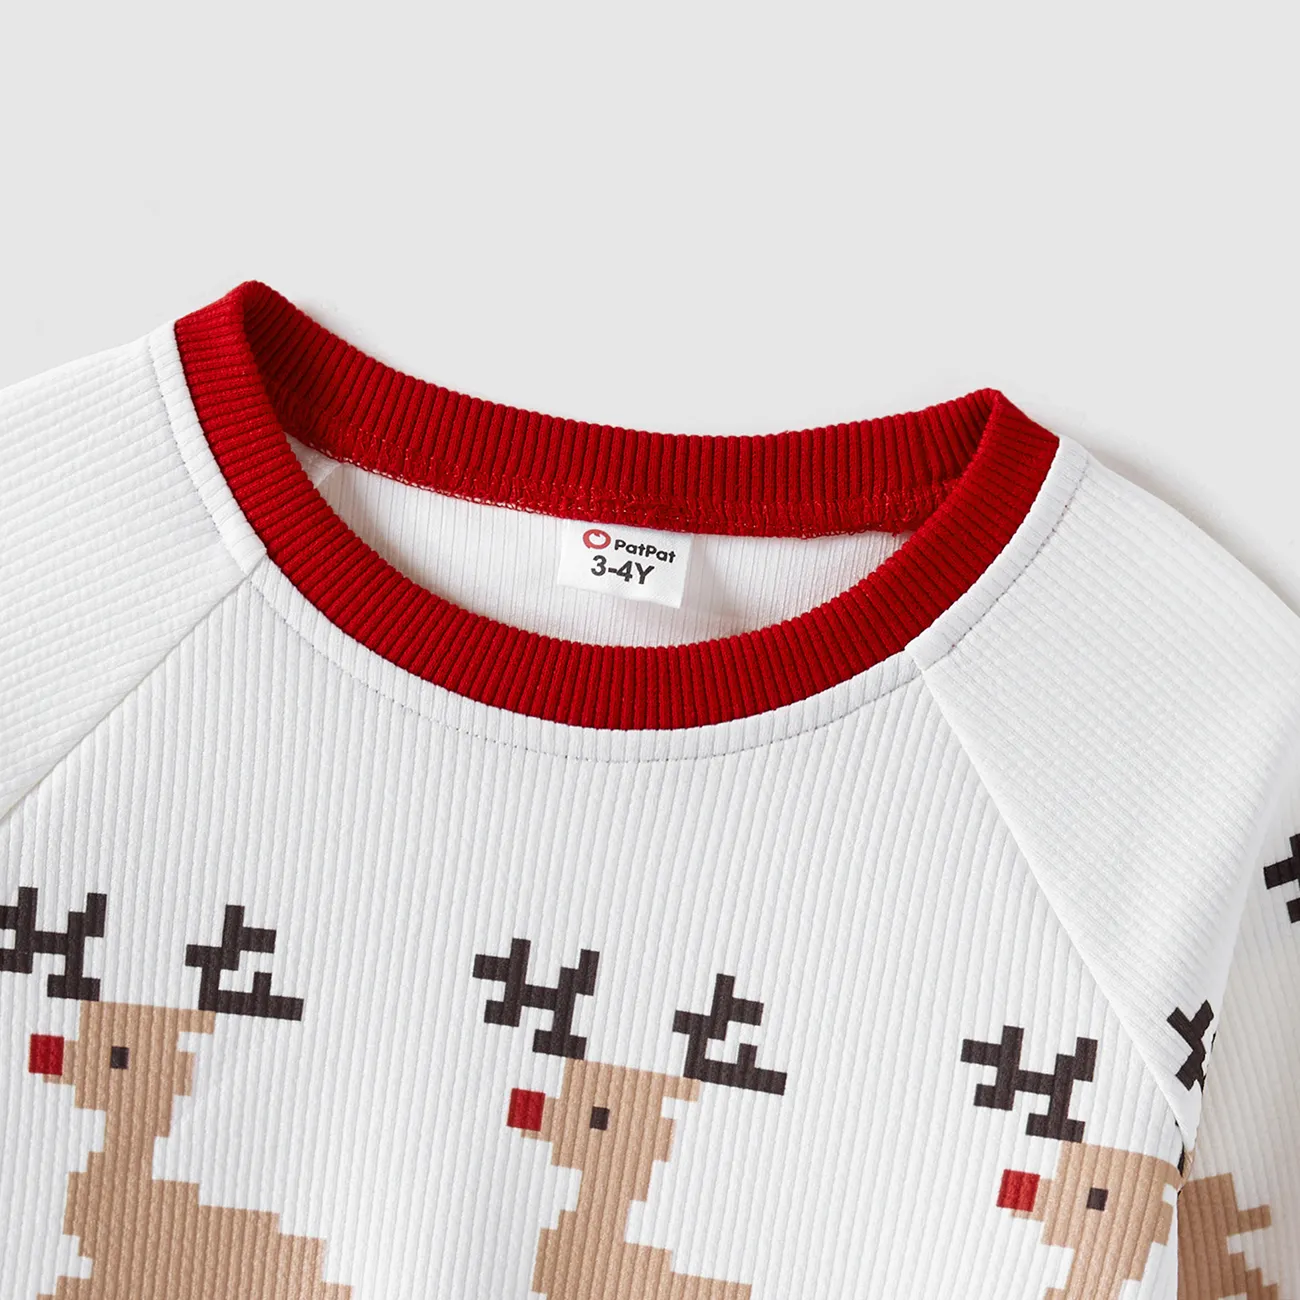 Christmas Family Matching Allover Reindeer Print Raglan-sleeve Sweatshirts Red big image 1